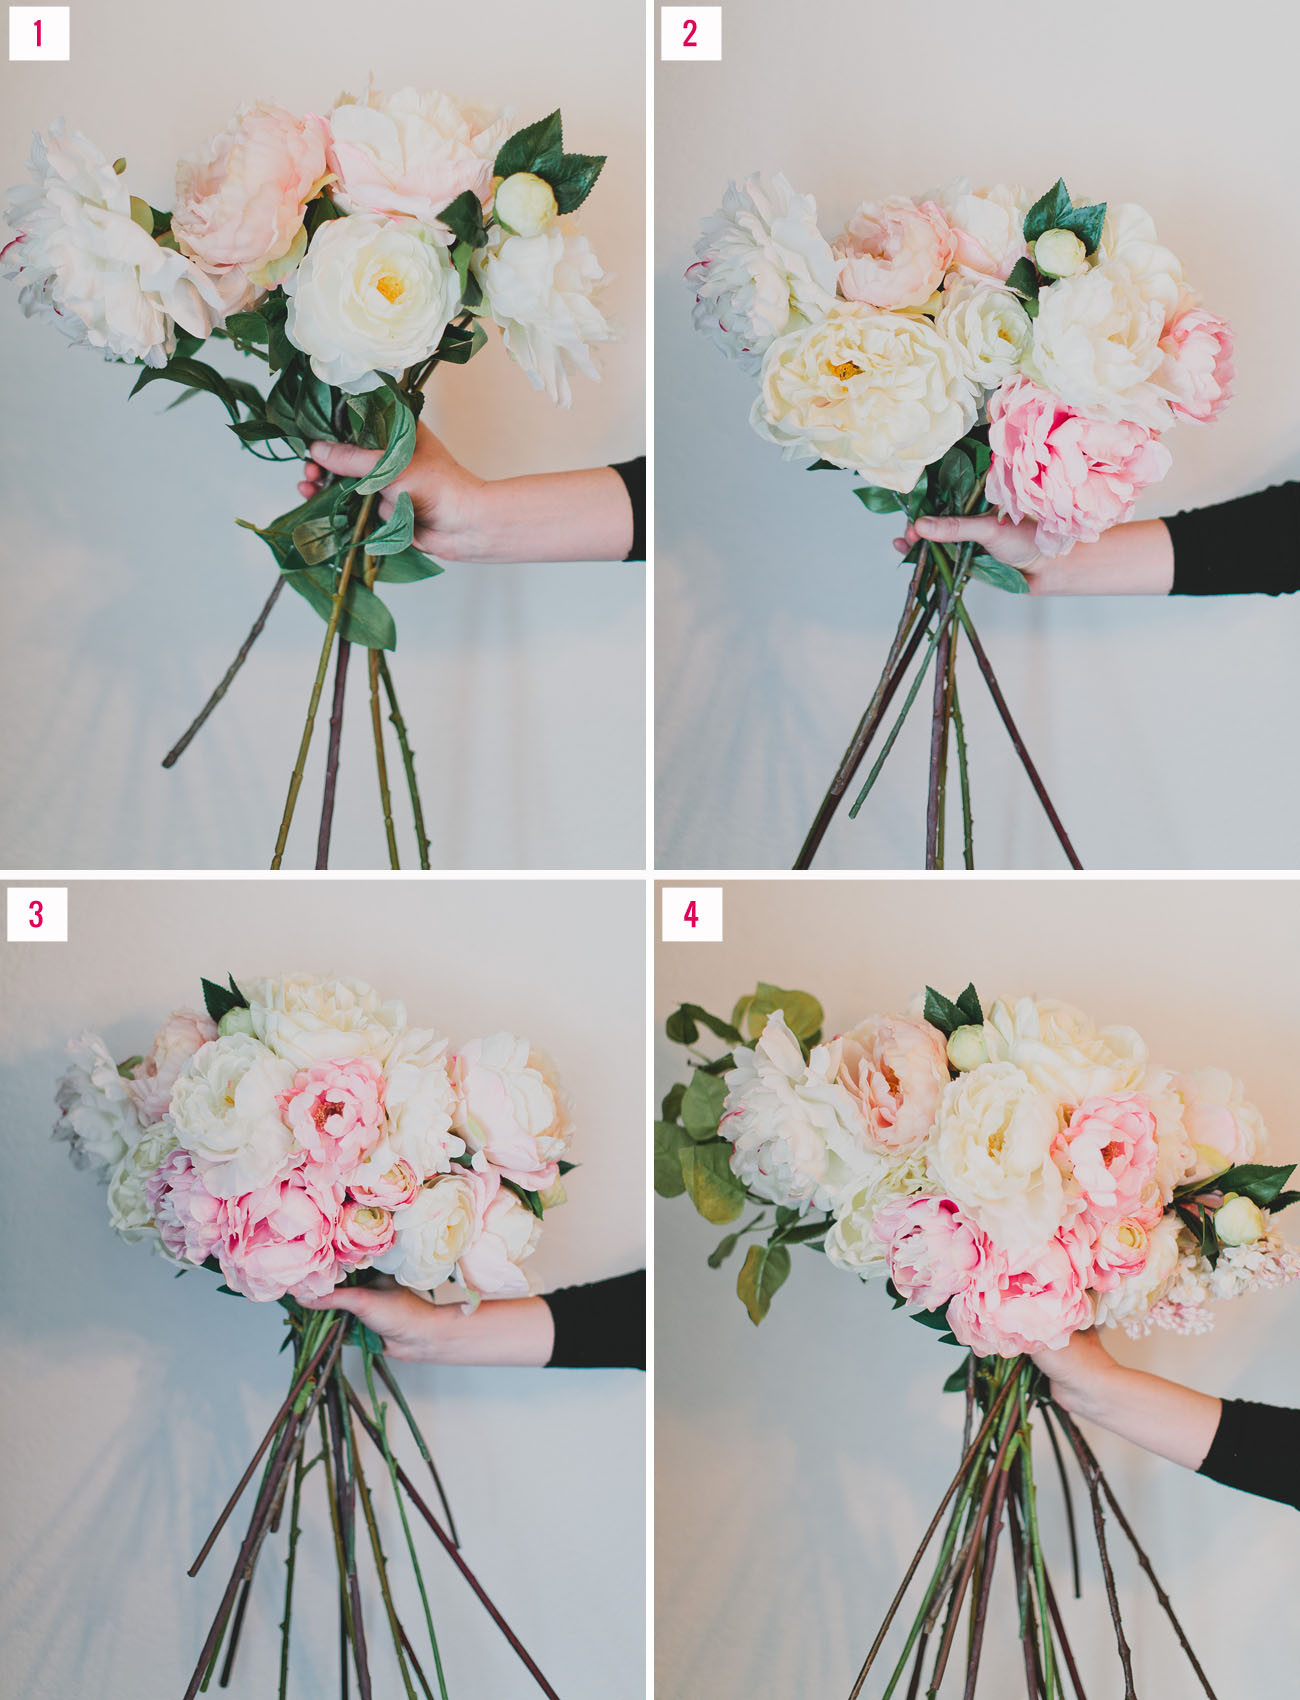 DIY Wedding Floral Arrangements
 DIY Silk Flower Bouquet with Afloral